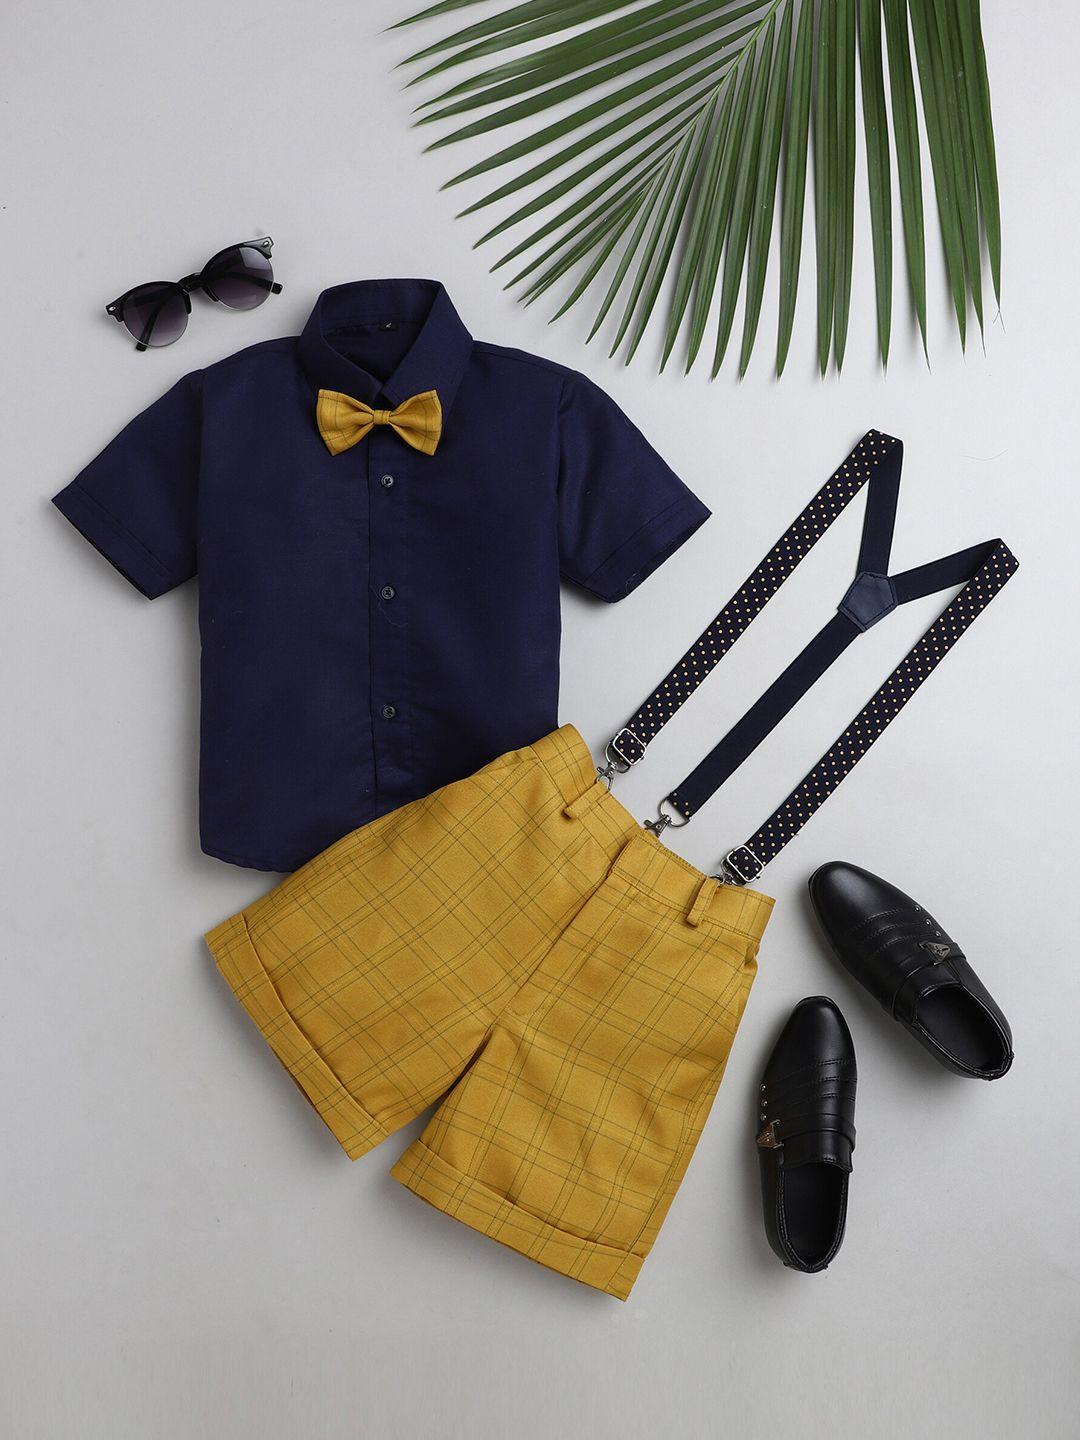 jeetethnics boys mustard & navy blue shirt & shorts with suspenders